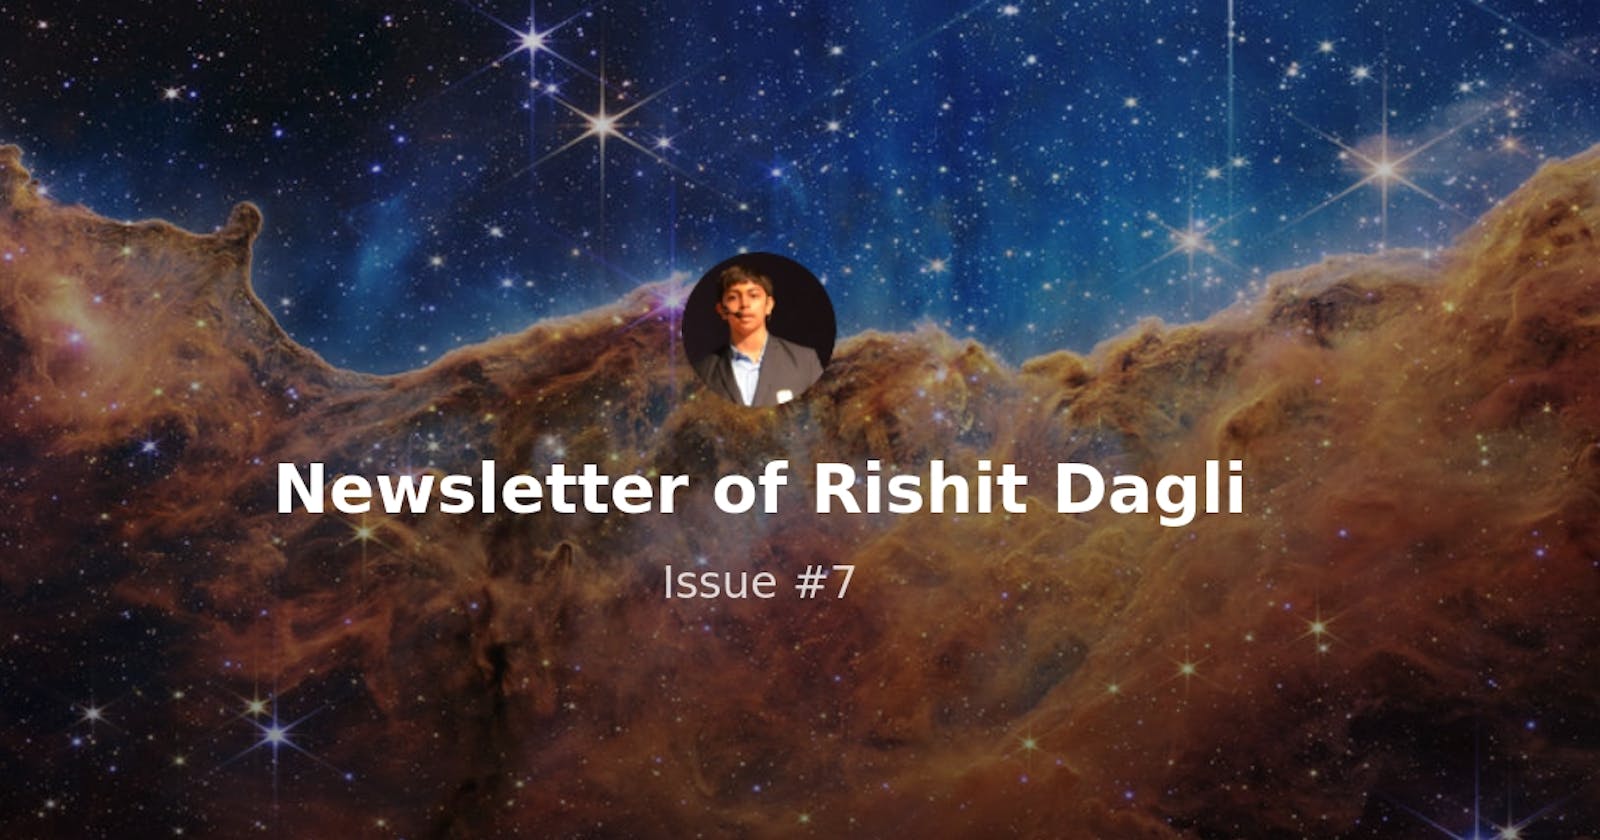 Newsletter of Rishit Dagli - Issue #7